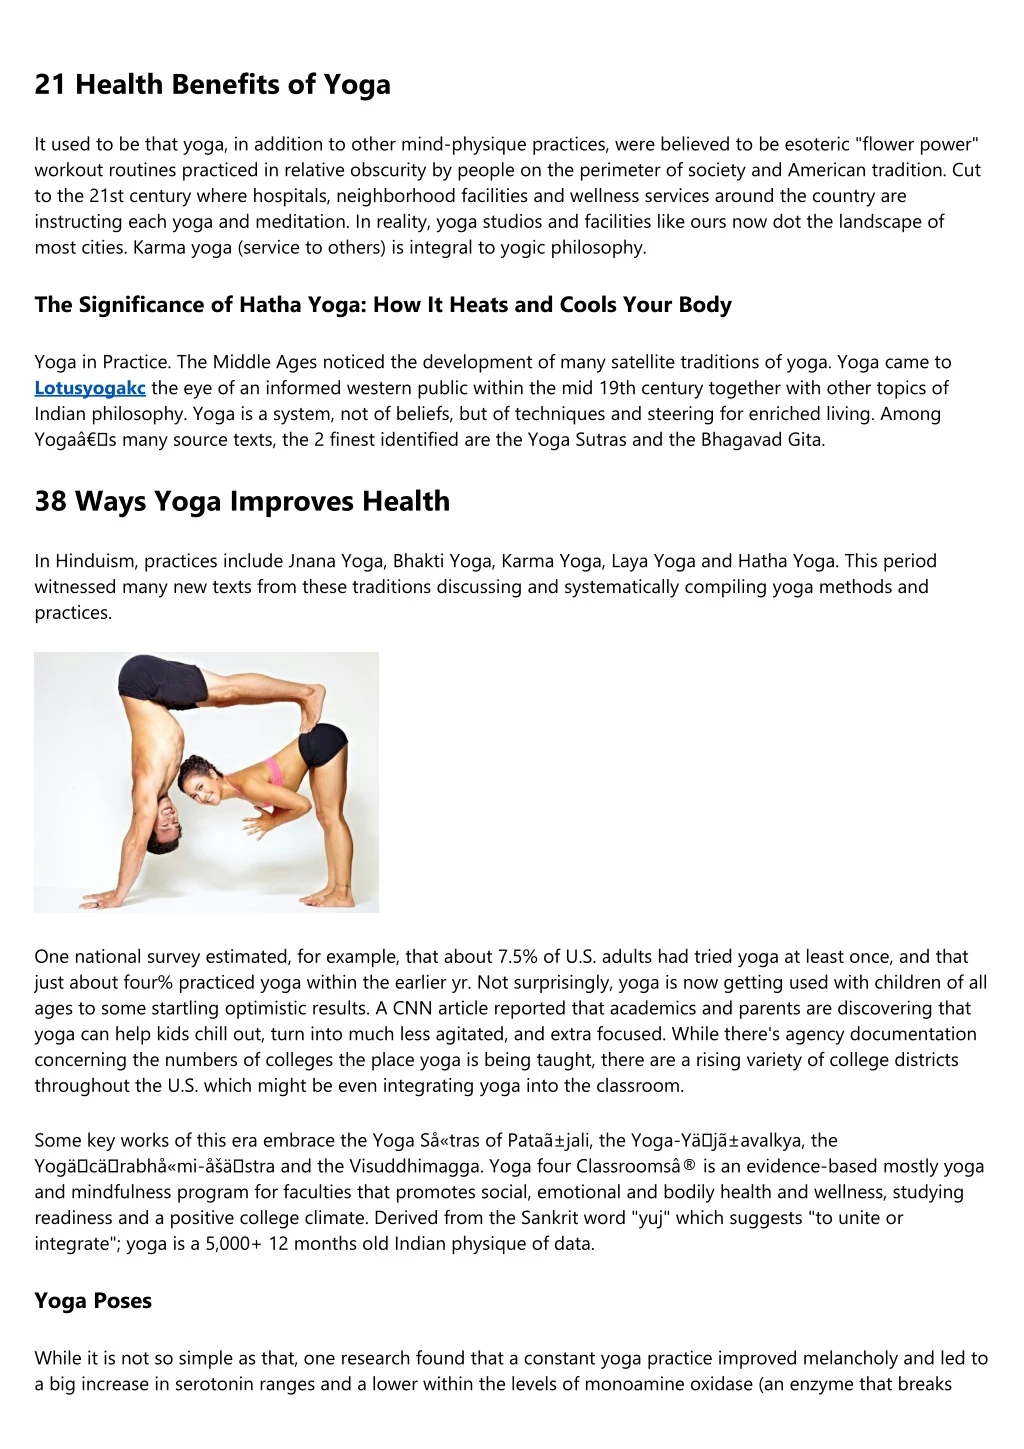 21 health benefits of yoga